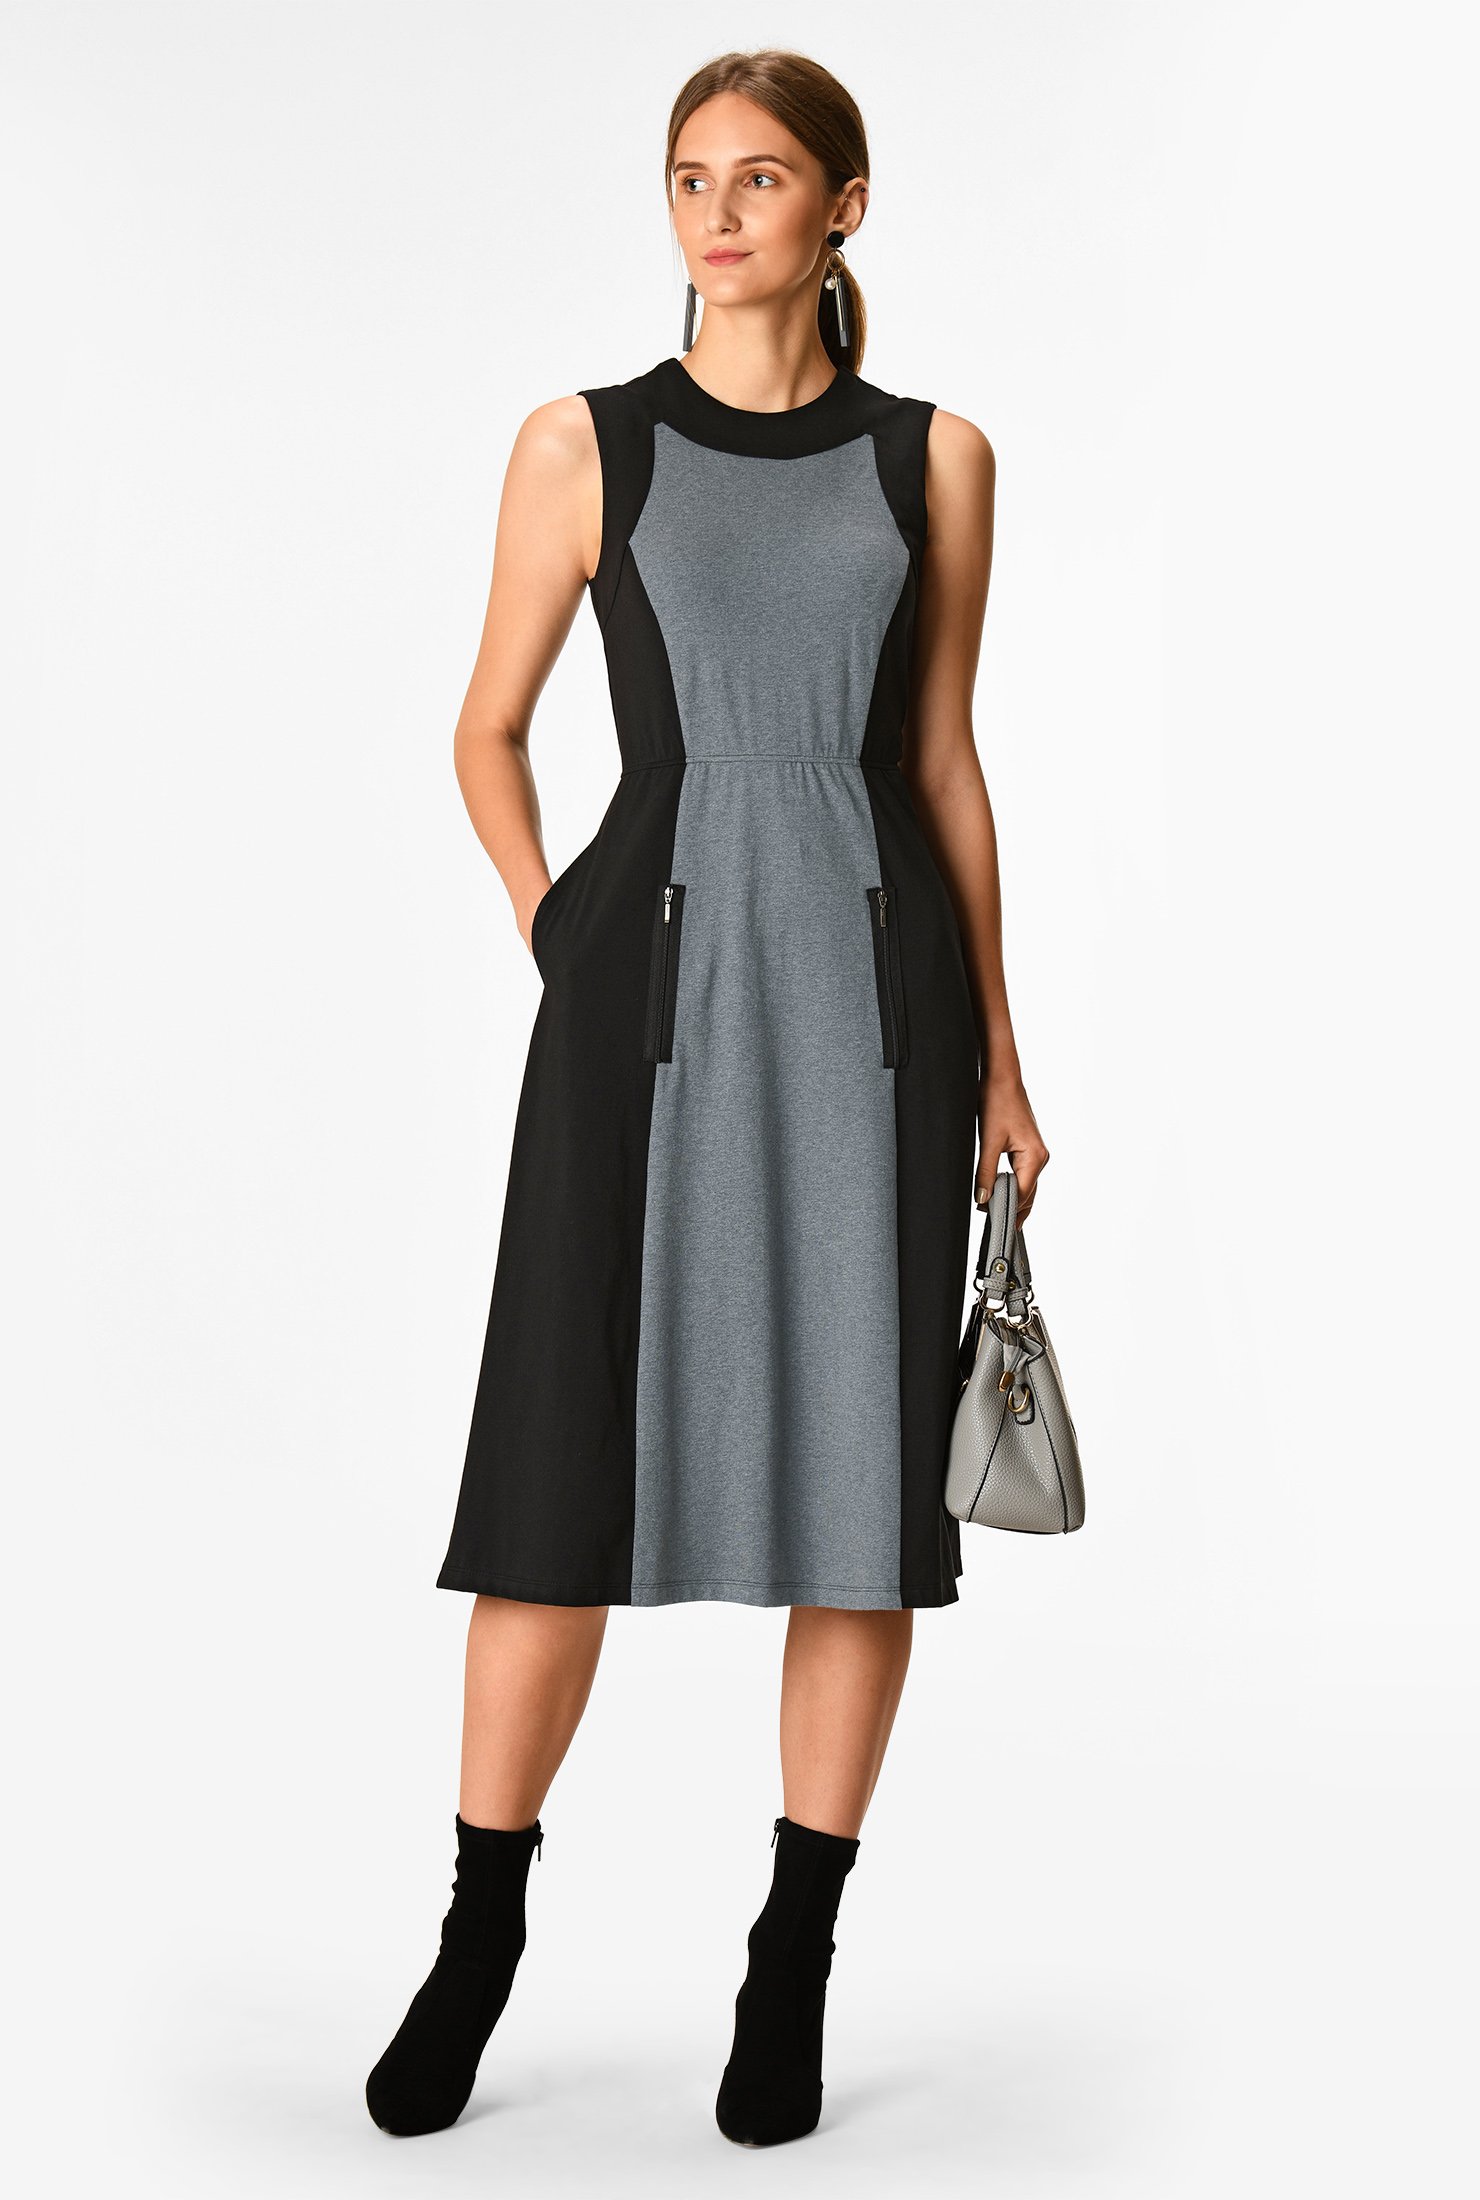 Shop Colorblock cotton knit zip pocket dress eShakti